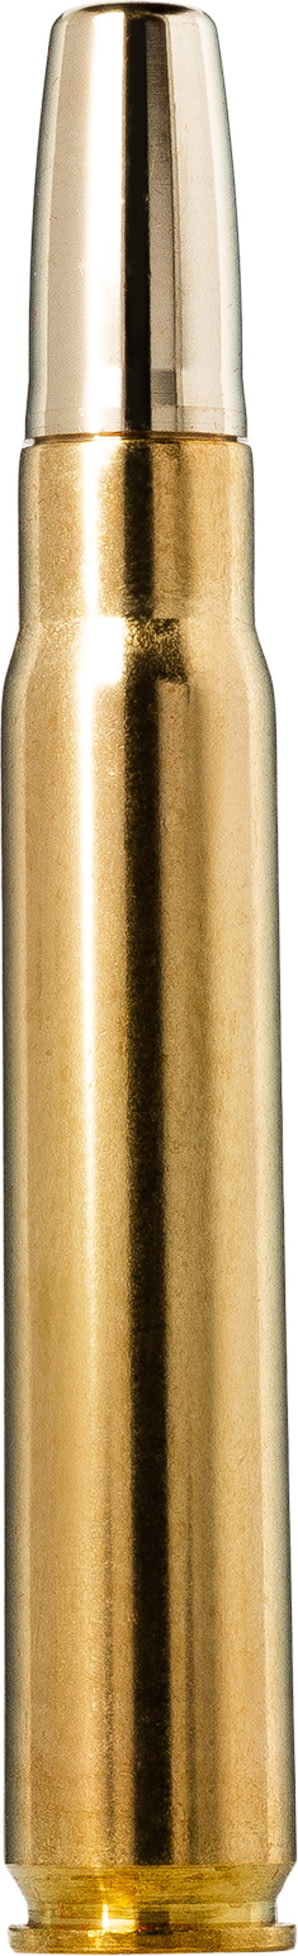 Norma Solid Ammunition 9.3x62mm Mauser 275 Grain Solid Brass Cased Centerfire Rifle Ammunition